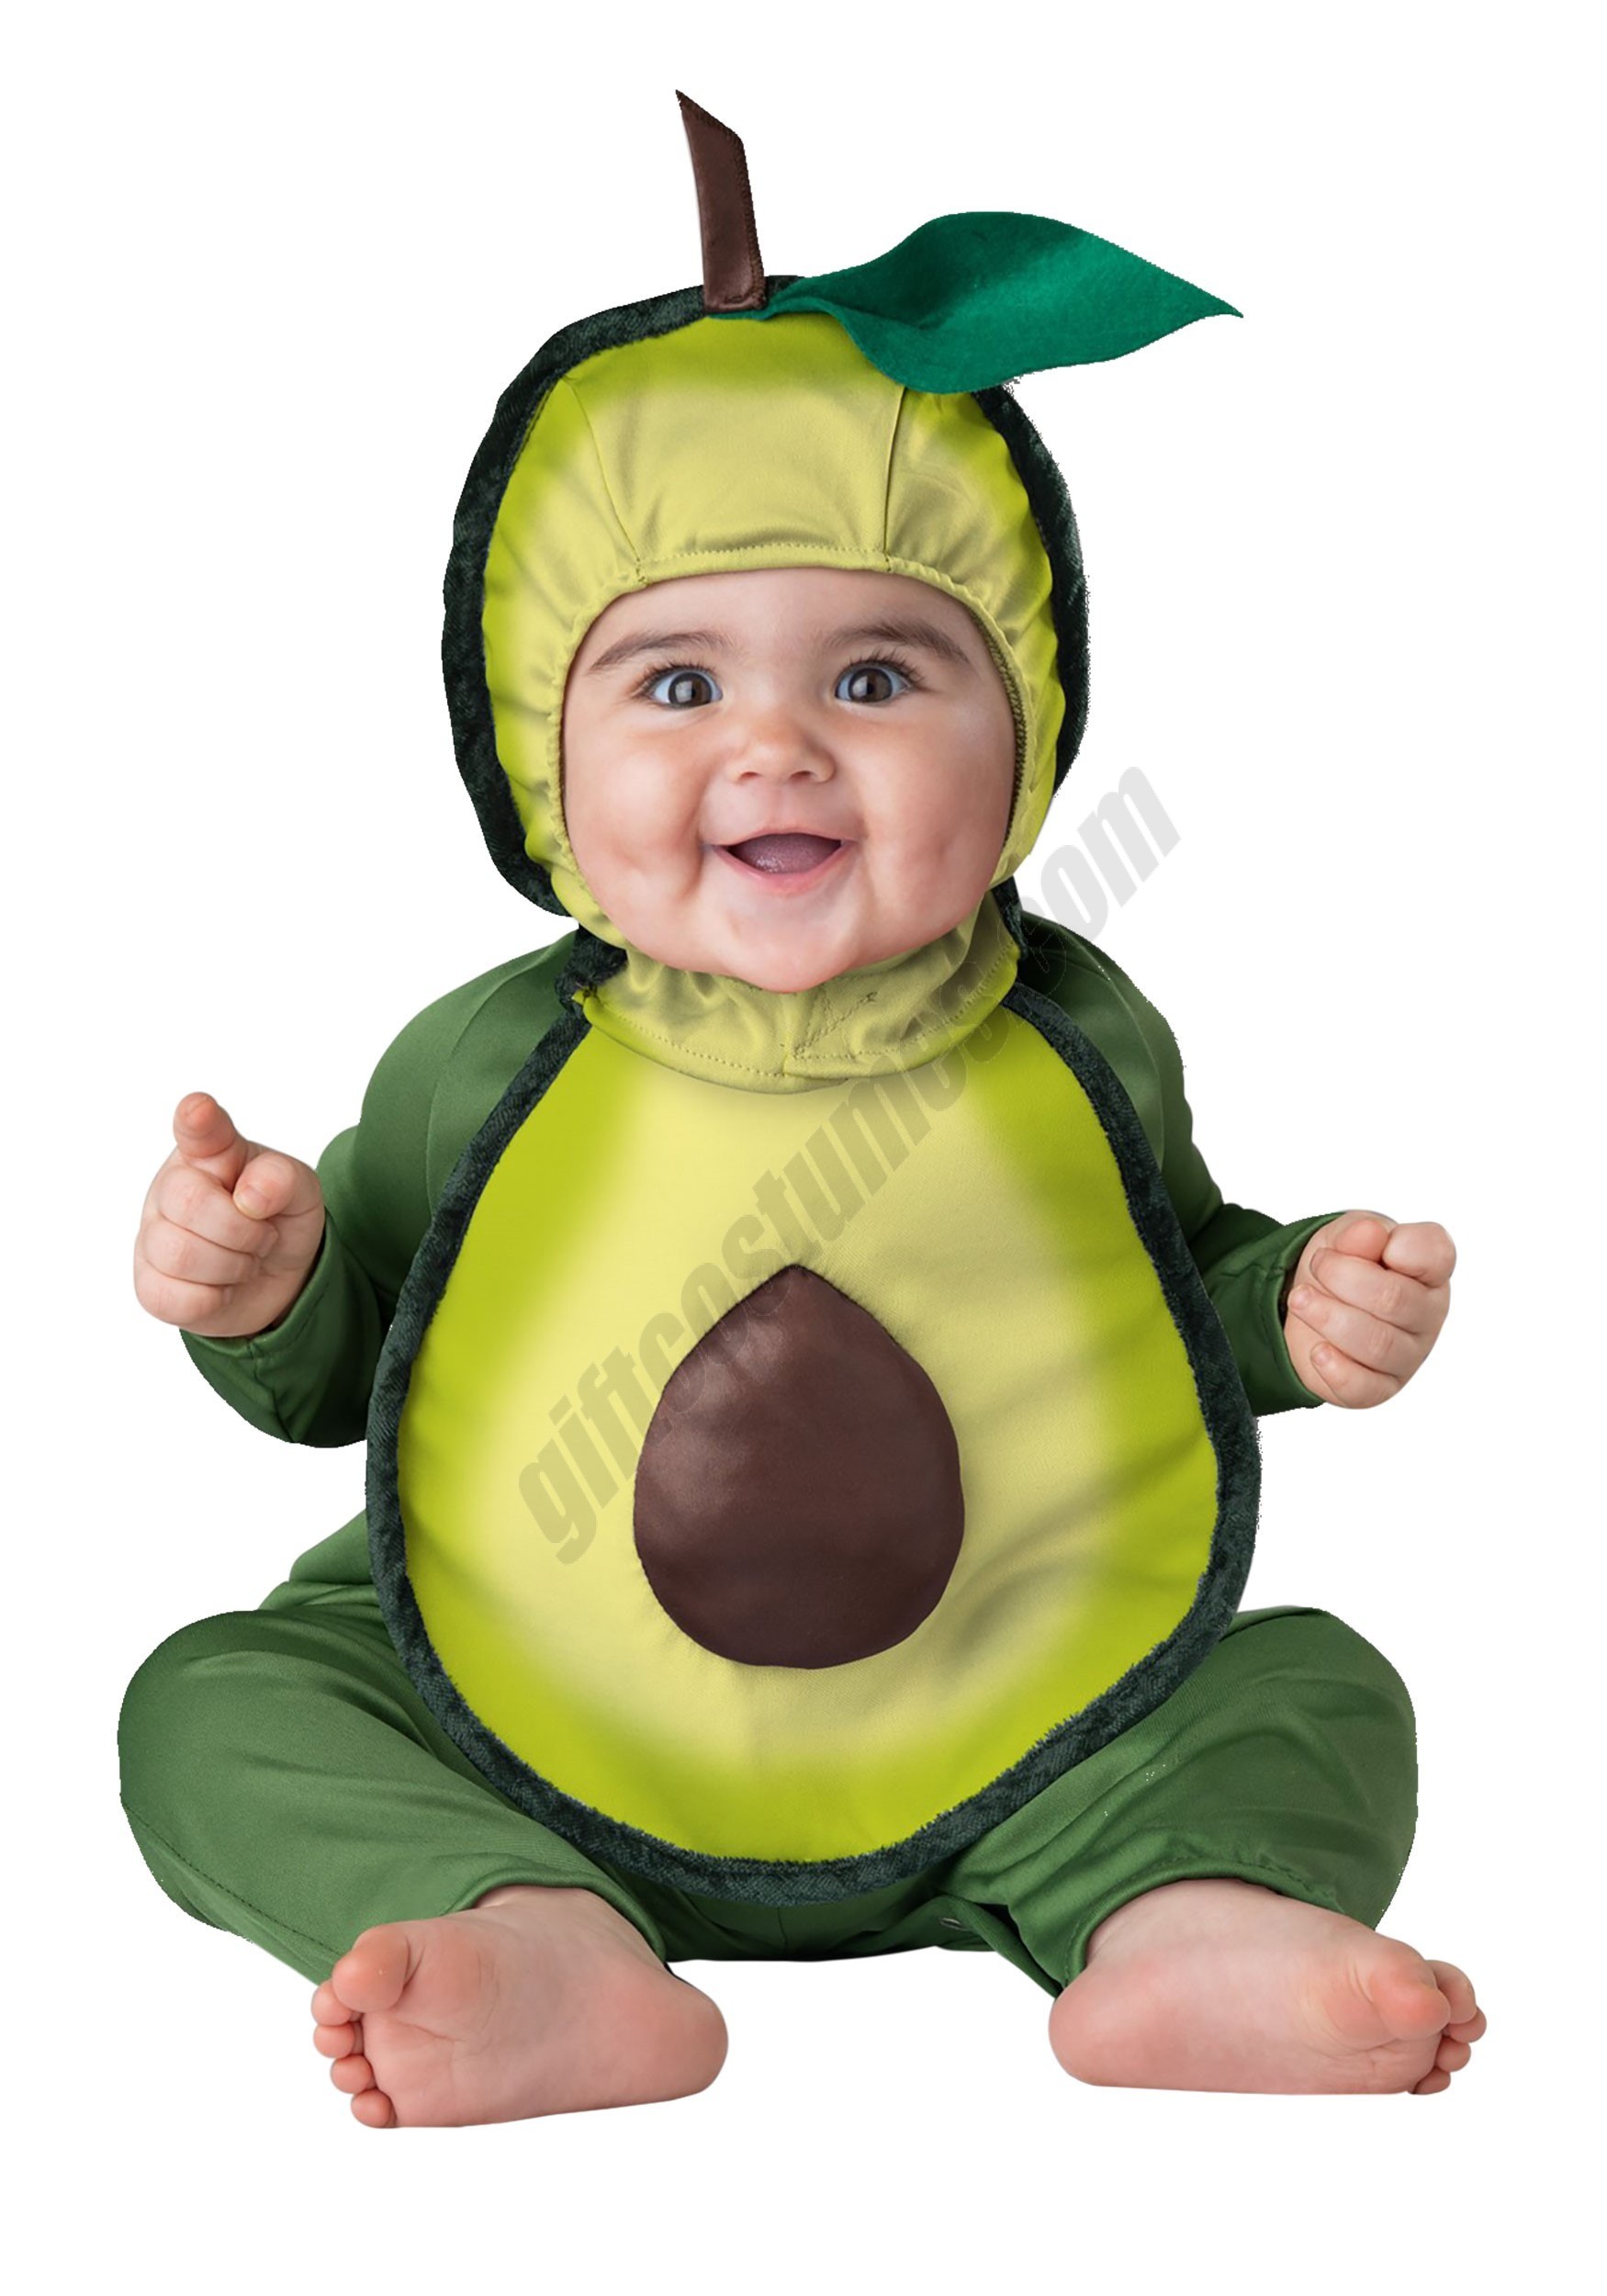 Infant Avocuddles Costume Promotions - Infant Avocuddles Costume Promotions